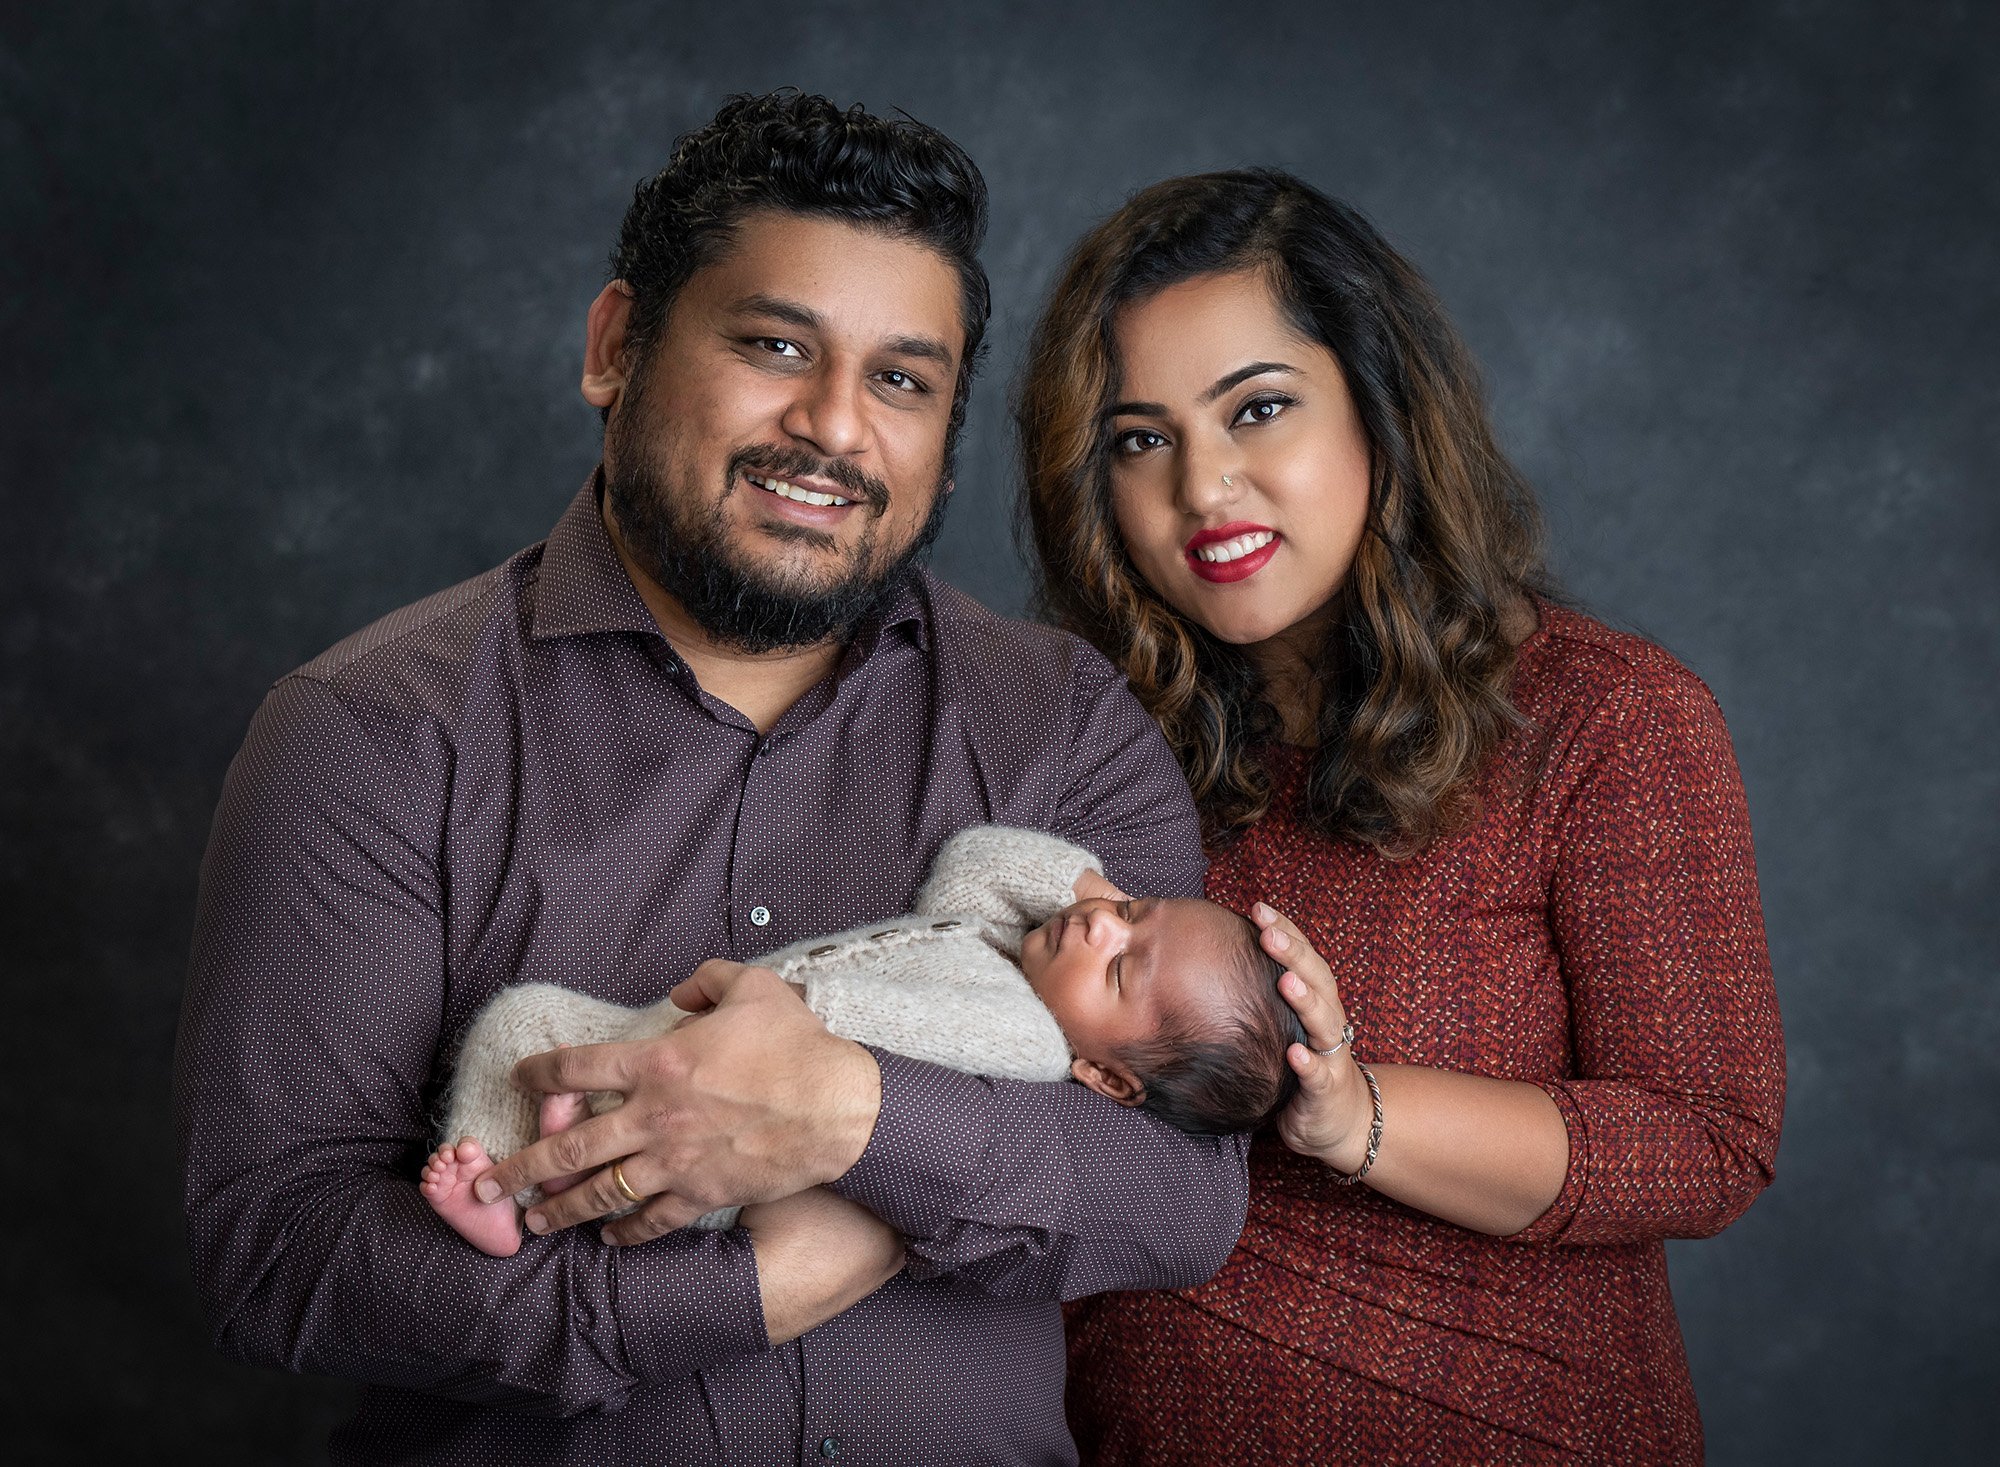 couple posing with newborn baby boy on grey backdrop